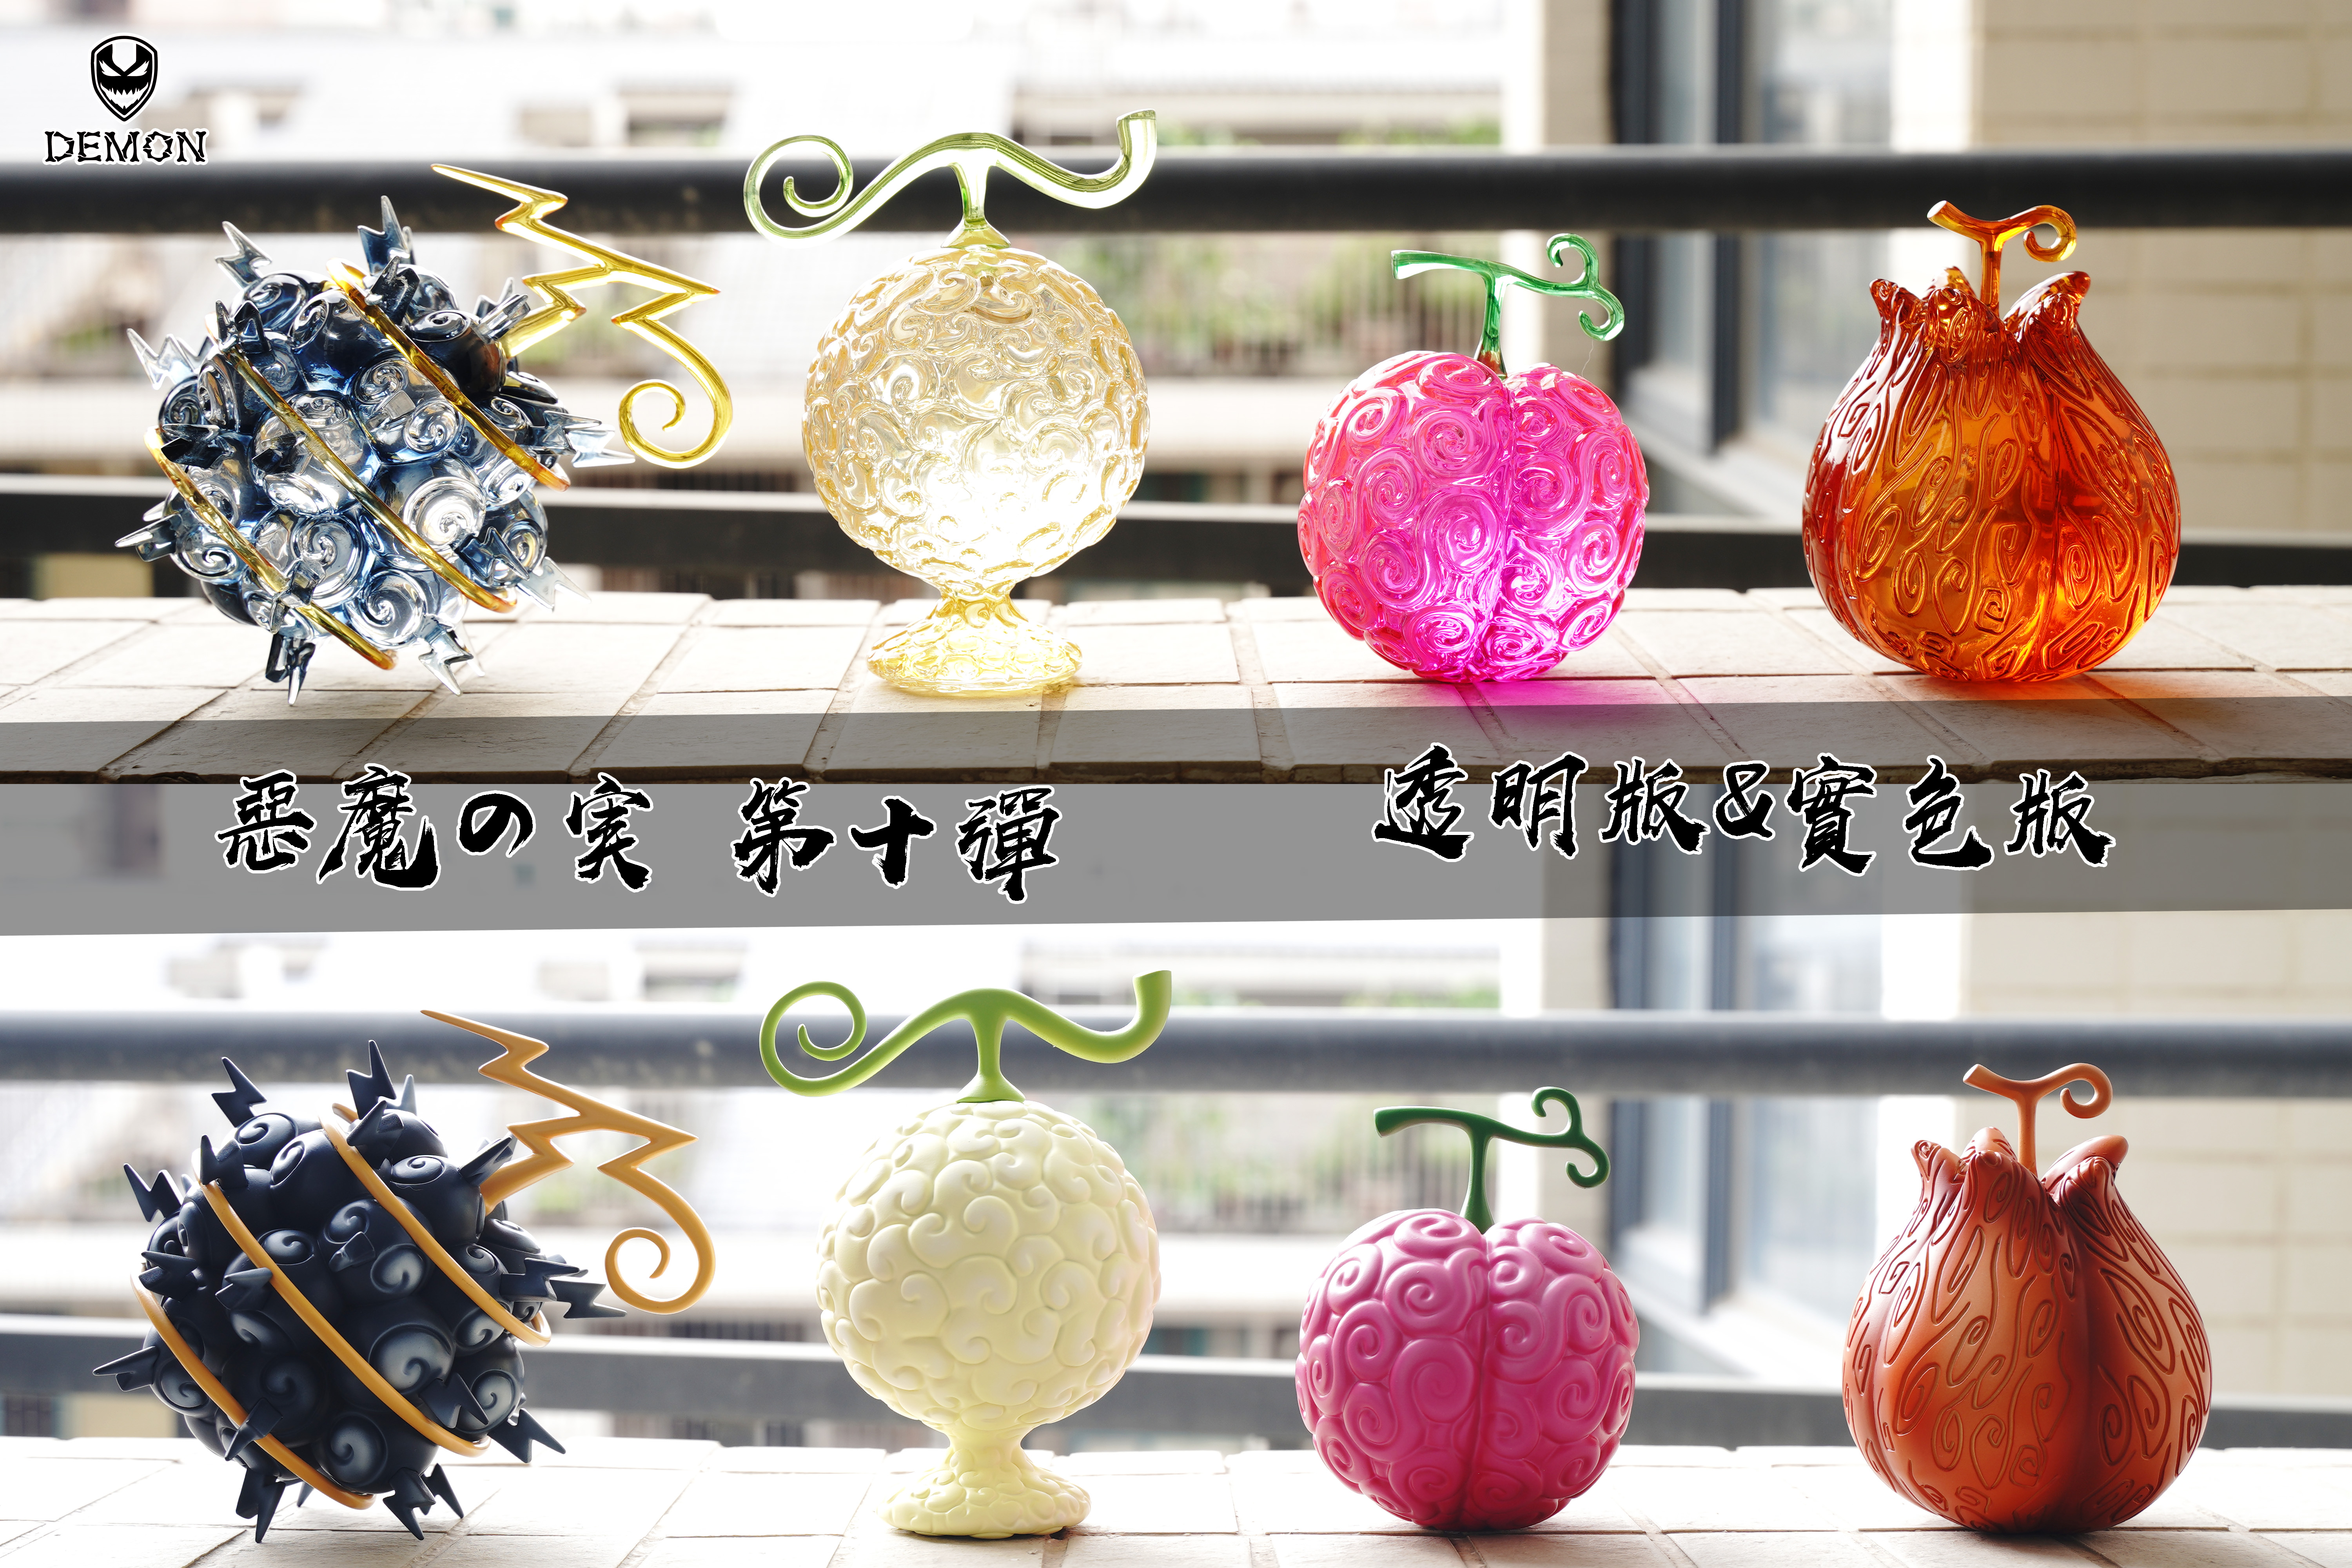 Demon Studio Ace Mera Mera no Mi Devil Fruits Resin GK Figure Gifts